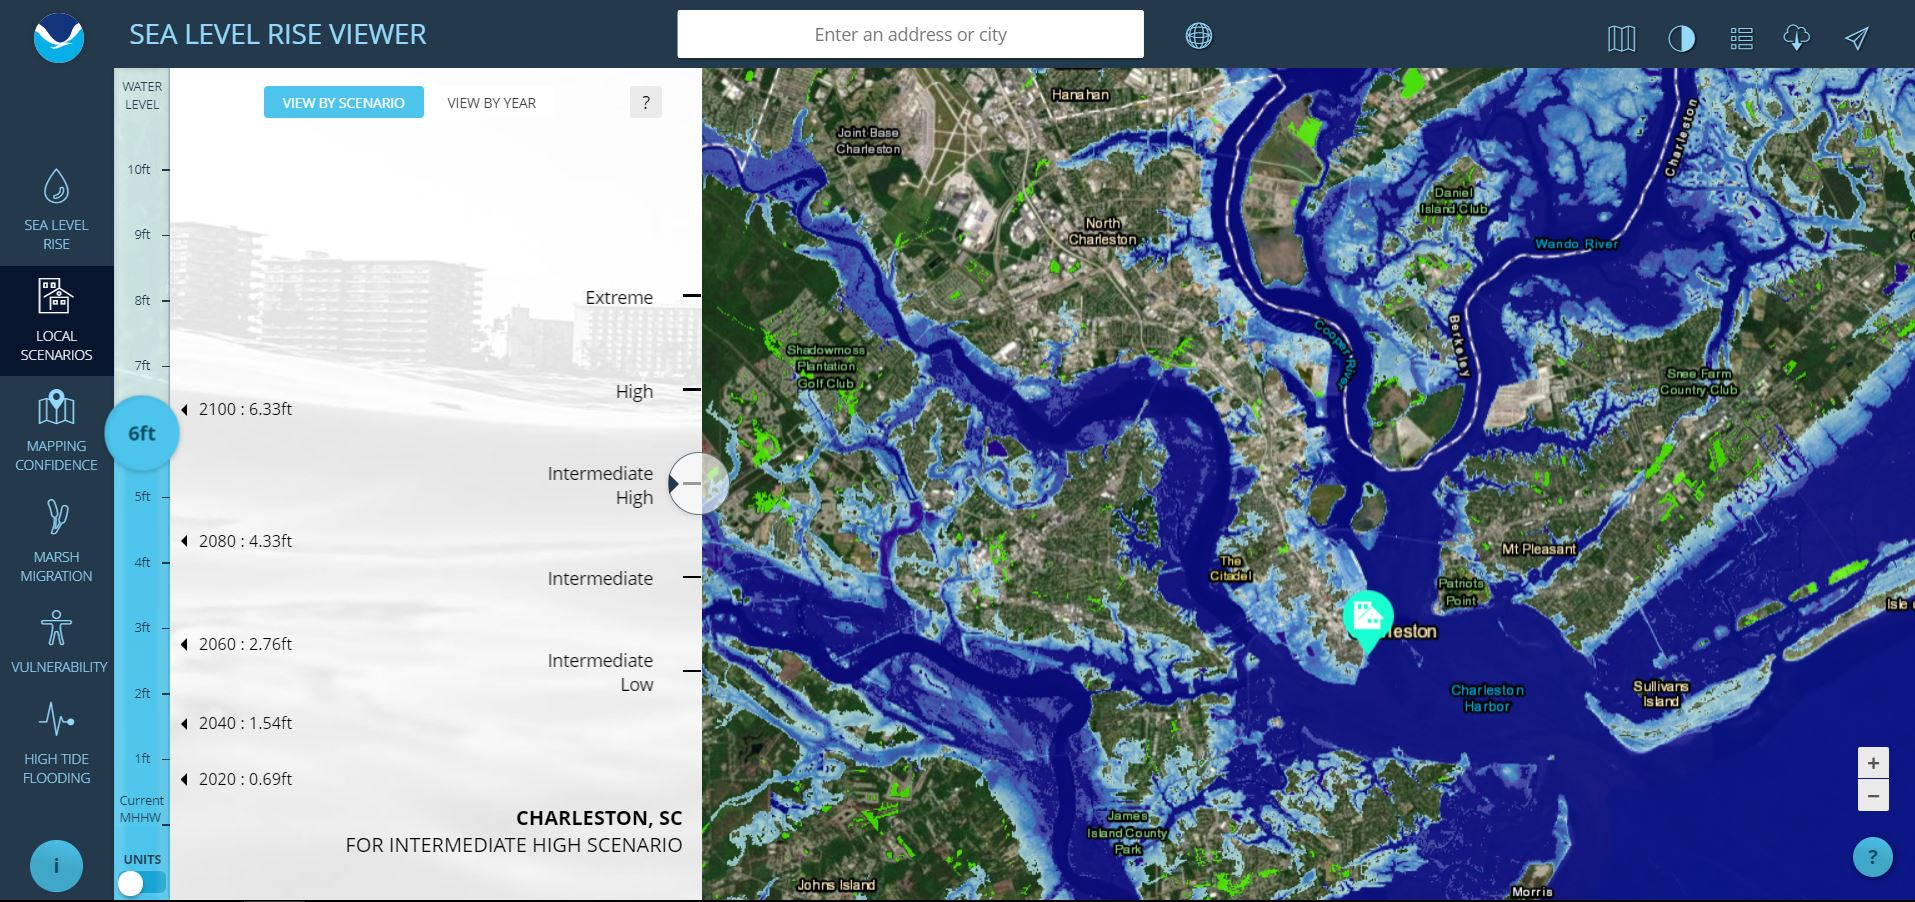 Sea Level Rise Viewer - Florida Future Flooding Map